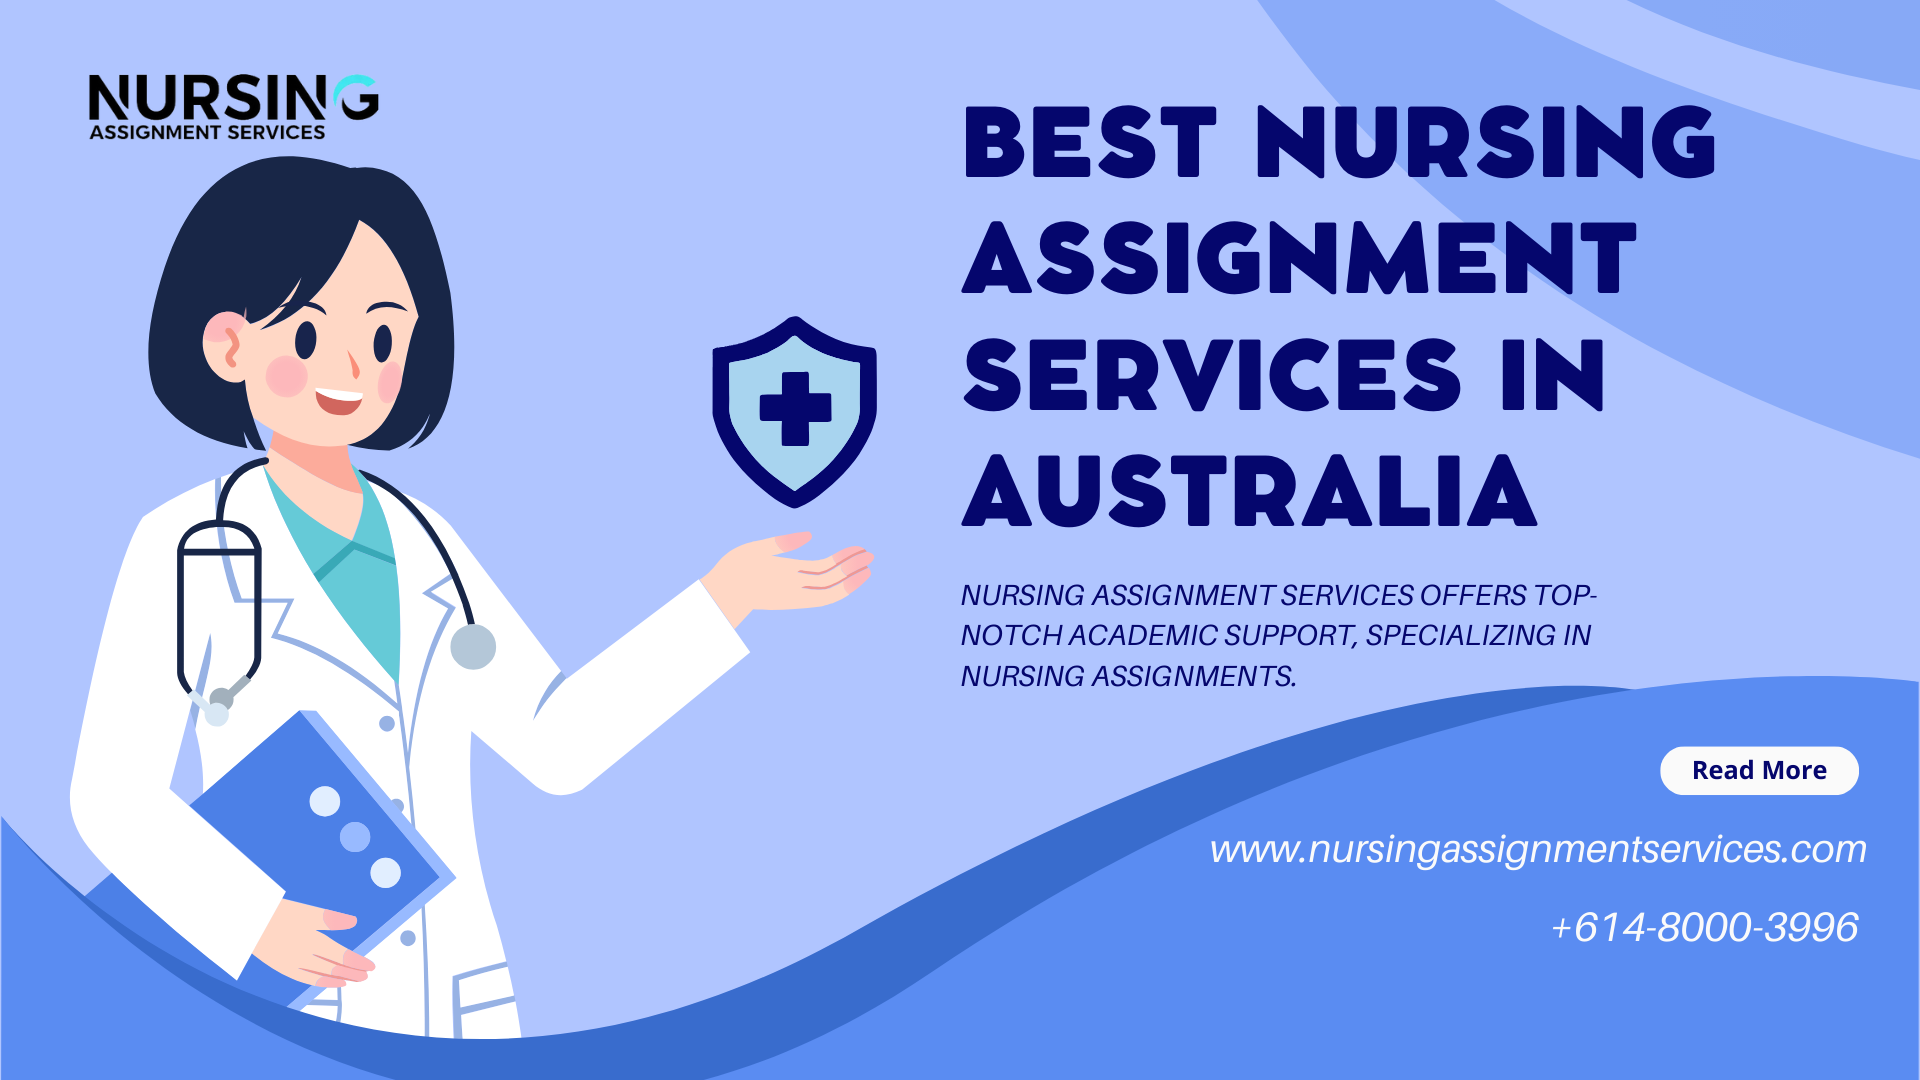 Nursing Assignment Services